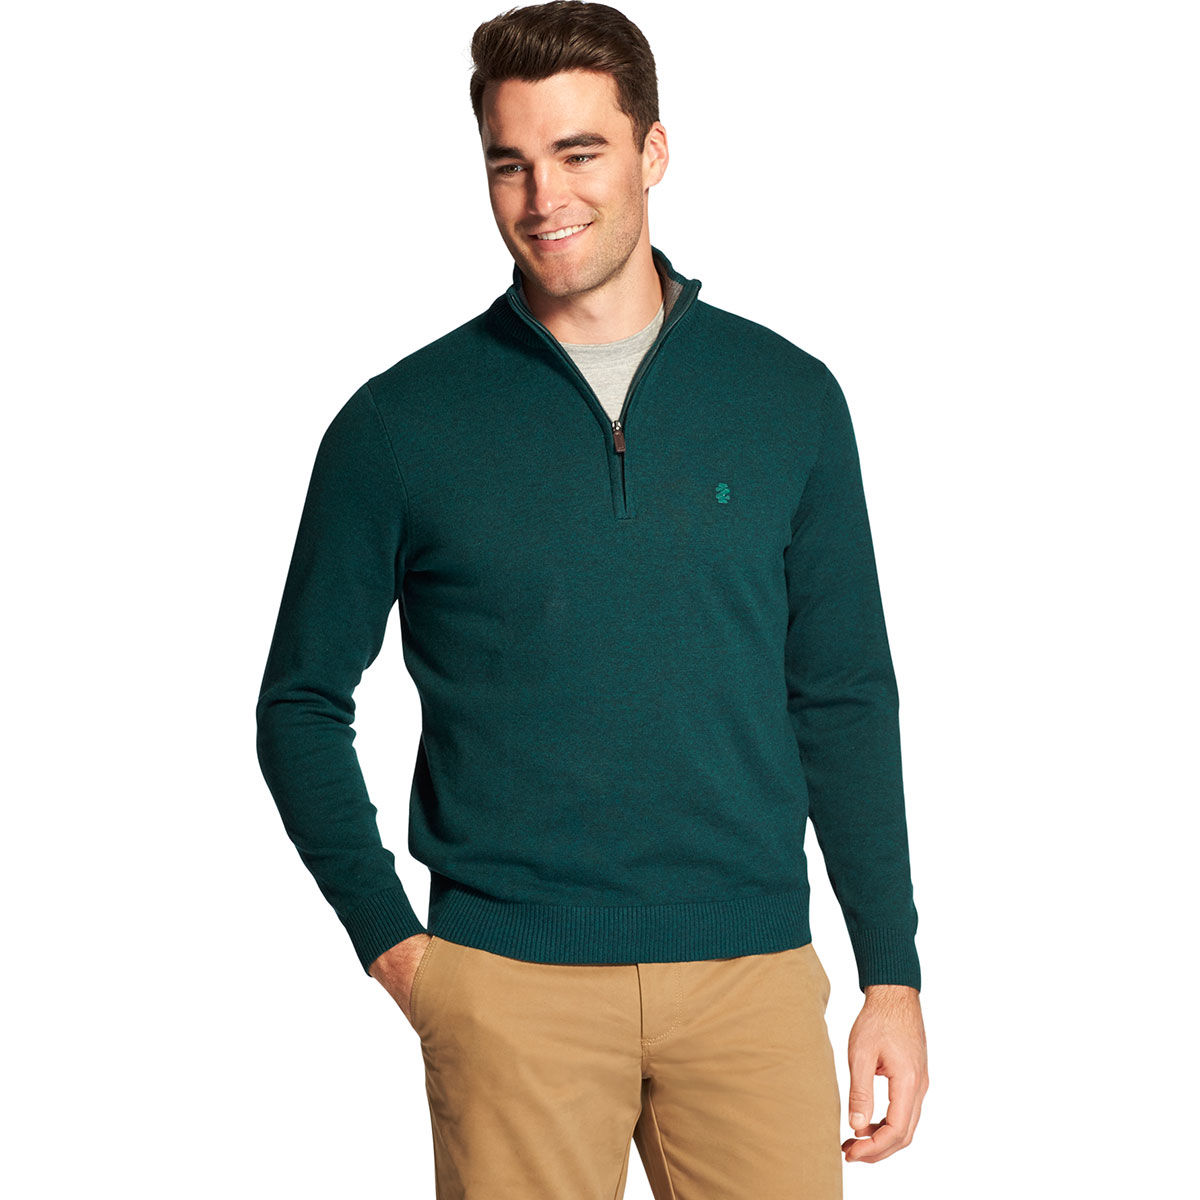 Izod Men's Premium Essentials 1/4 Zip Sweater - Green, M